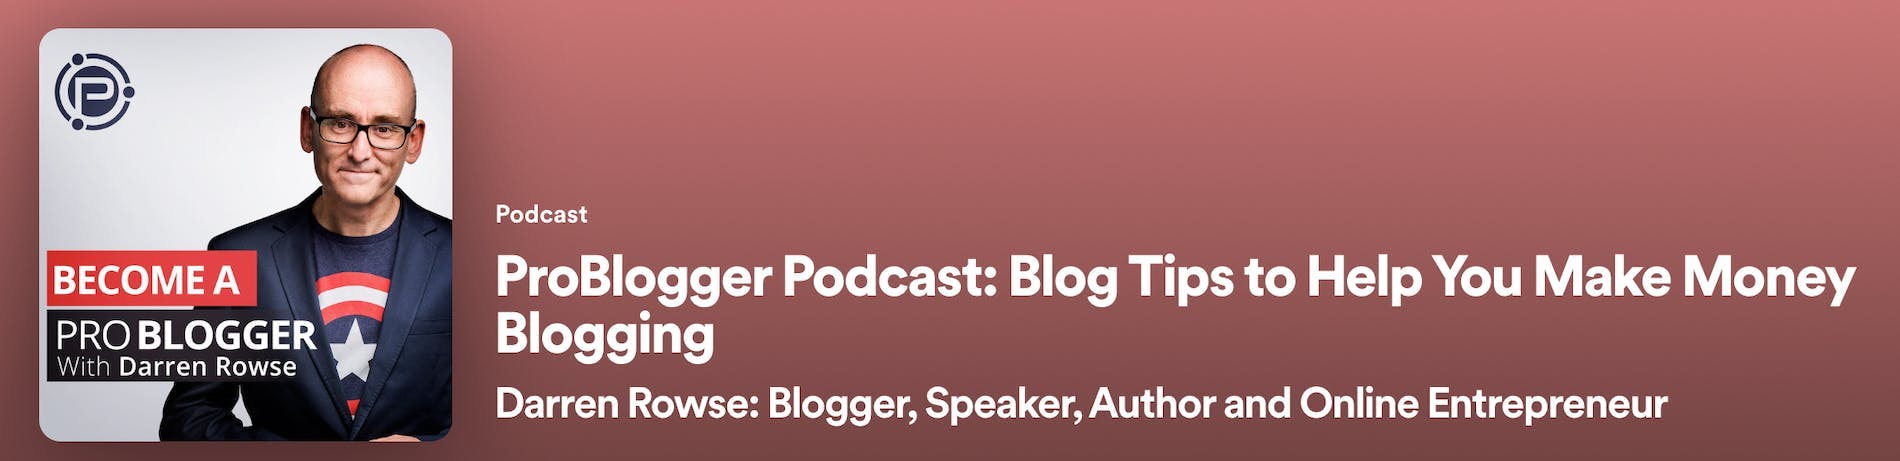 ProBlogger podcast